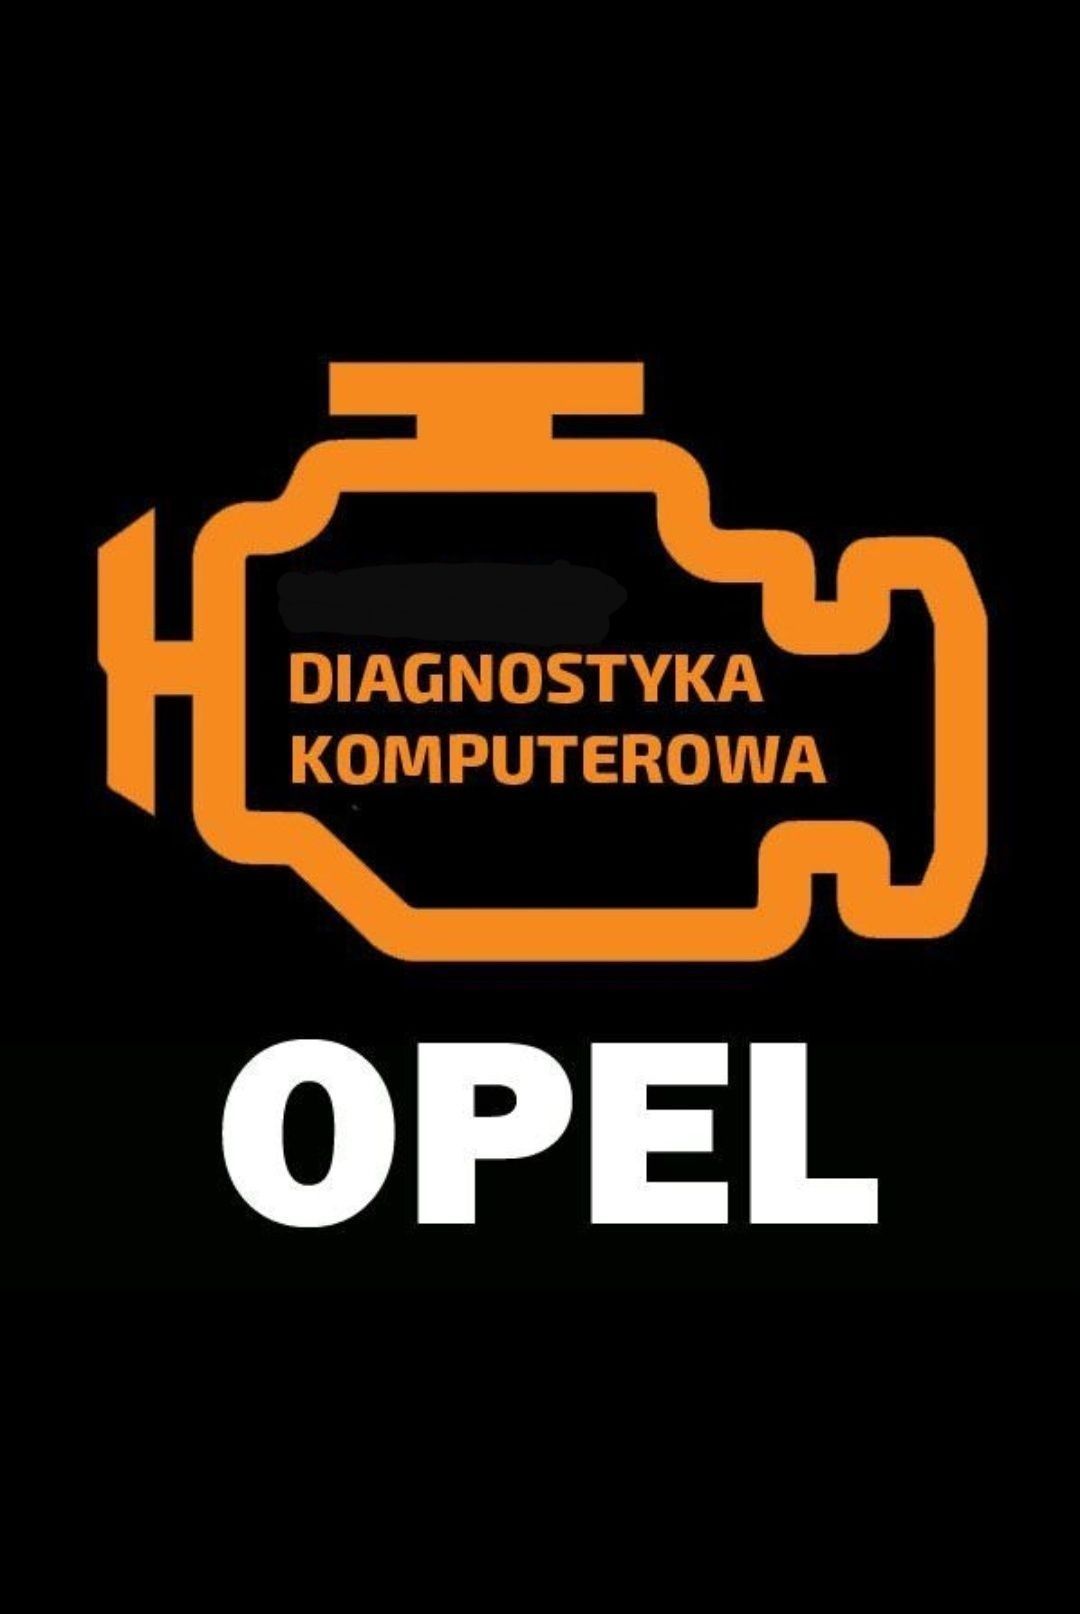 Diagnostyka Komputerowa Opel,Naprawa elektroniki,Programowanie MDI